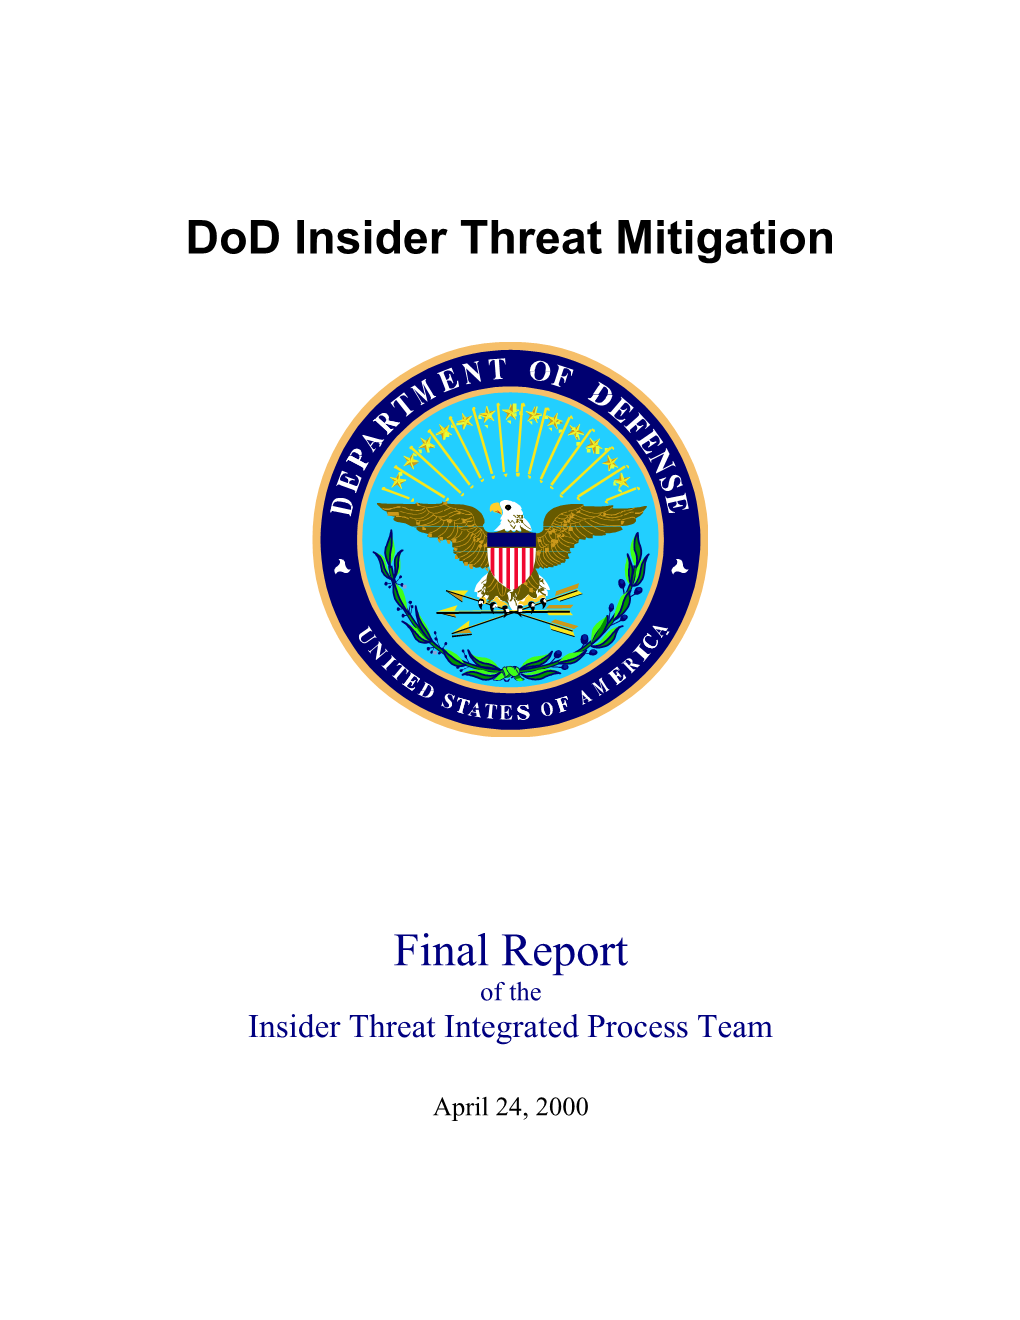 Insider Threat IPT Final Report